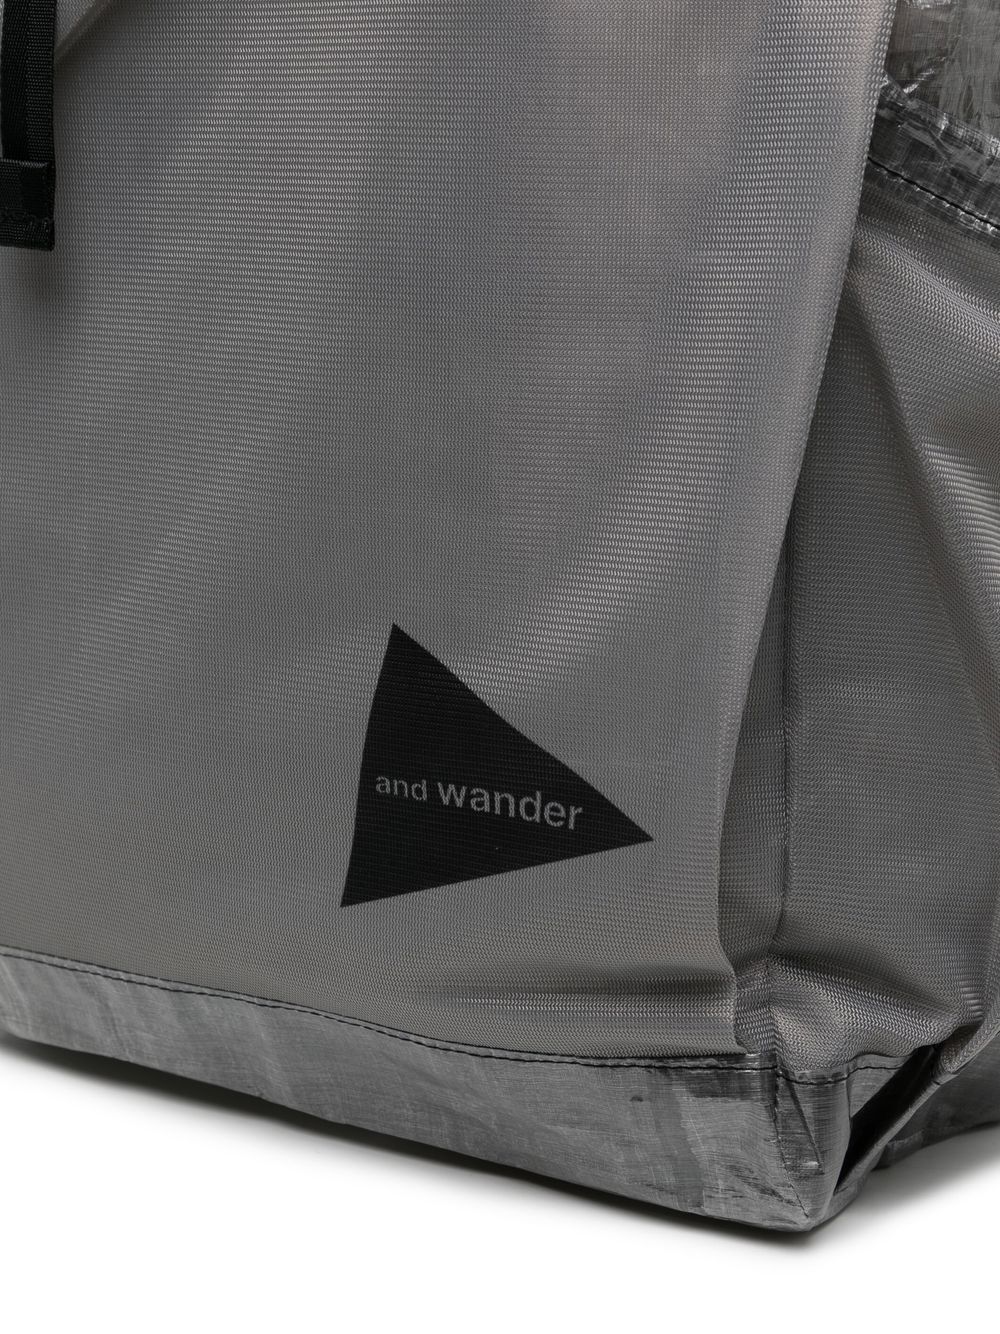 AND WANDER-Dyneema backpack-5742975120 22 CHARCOAL